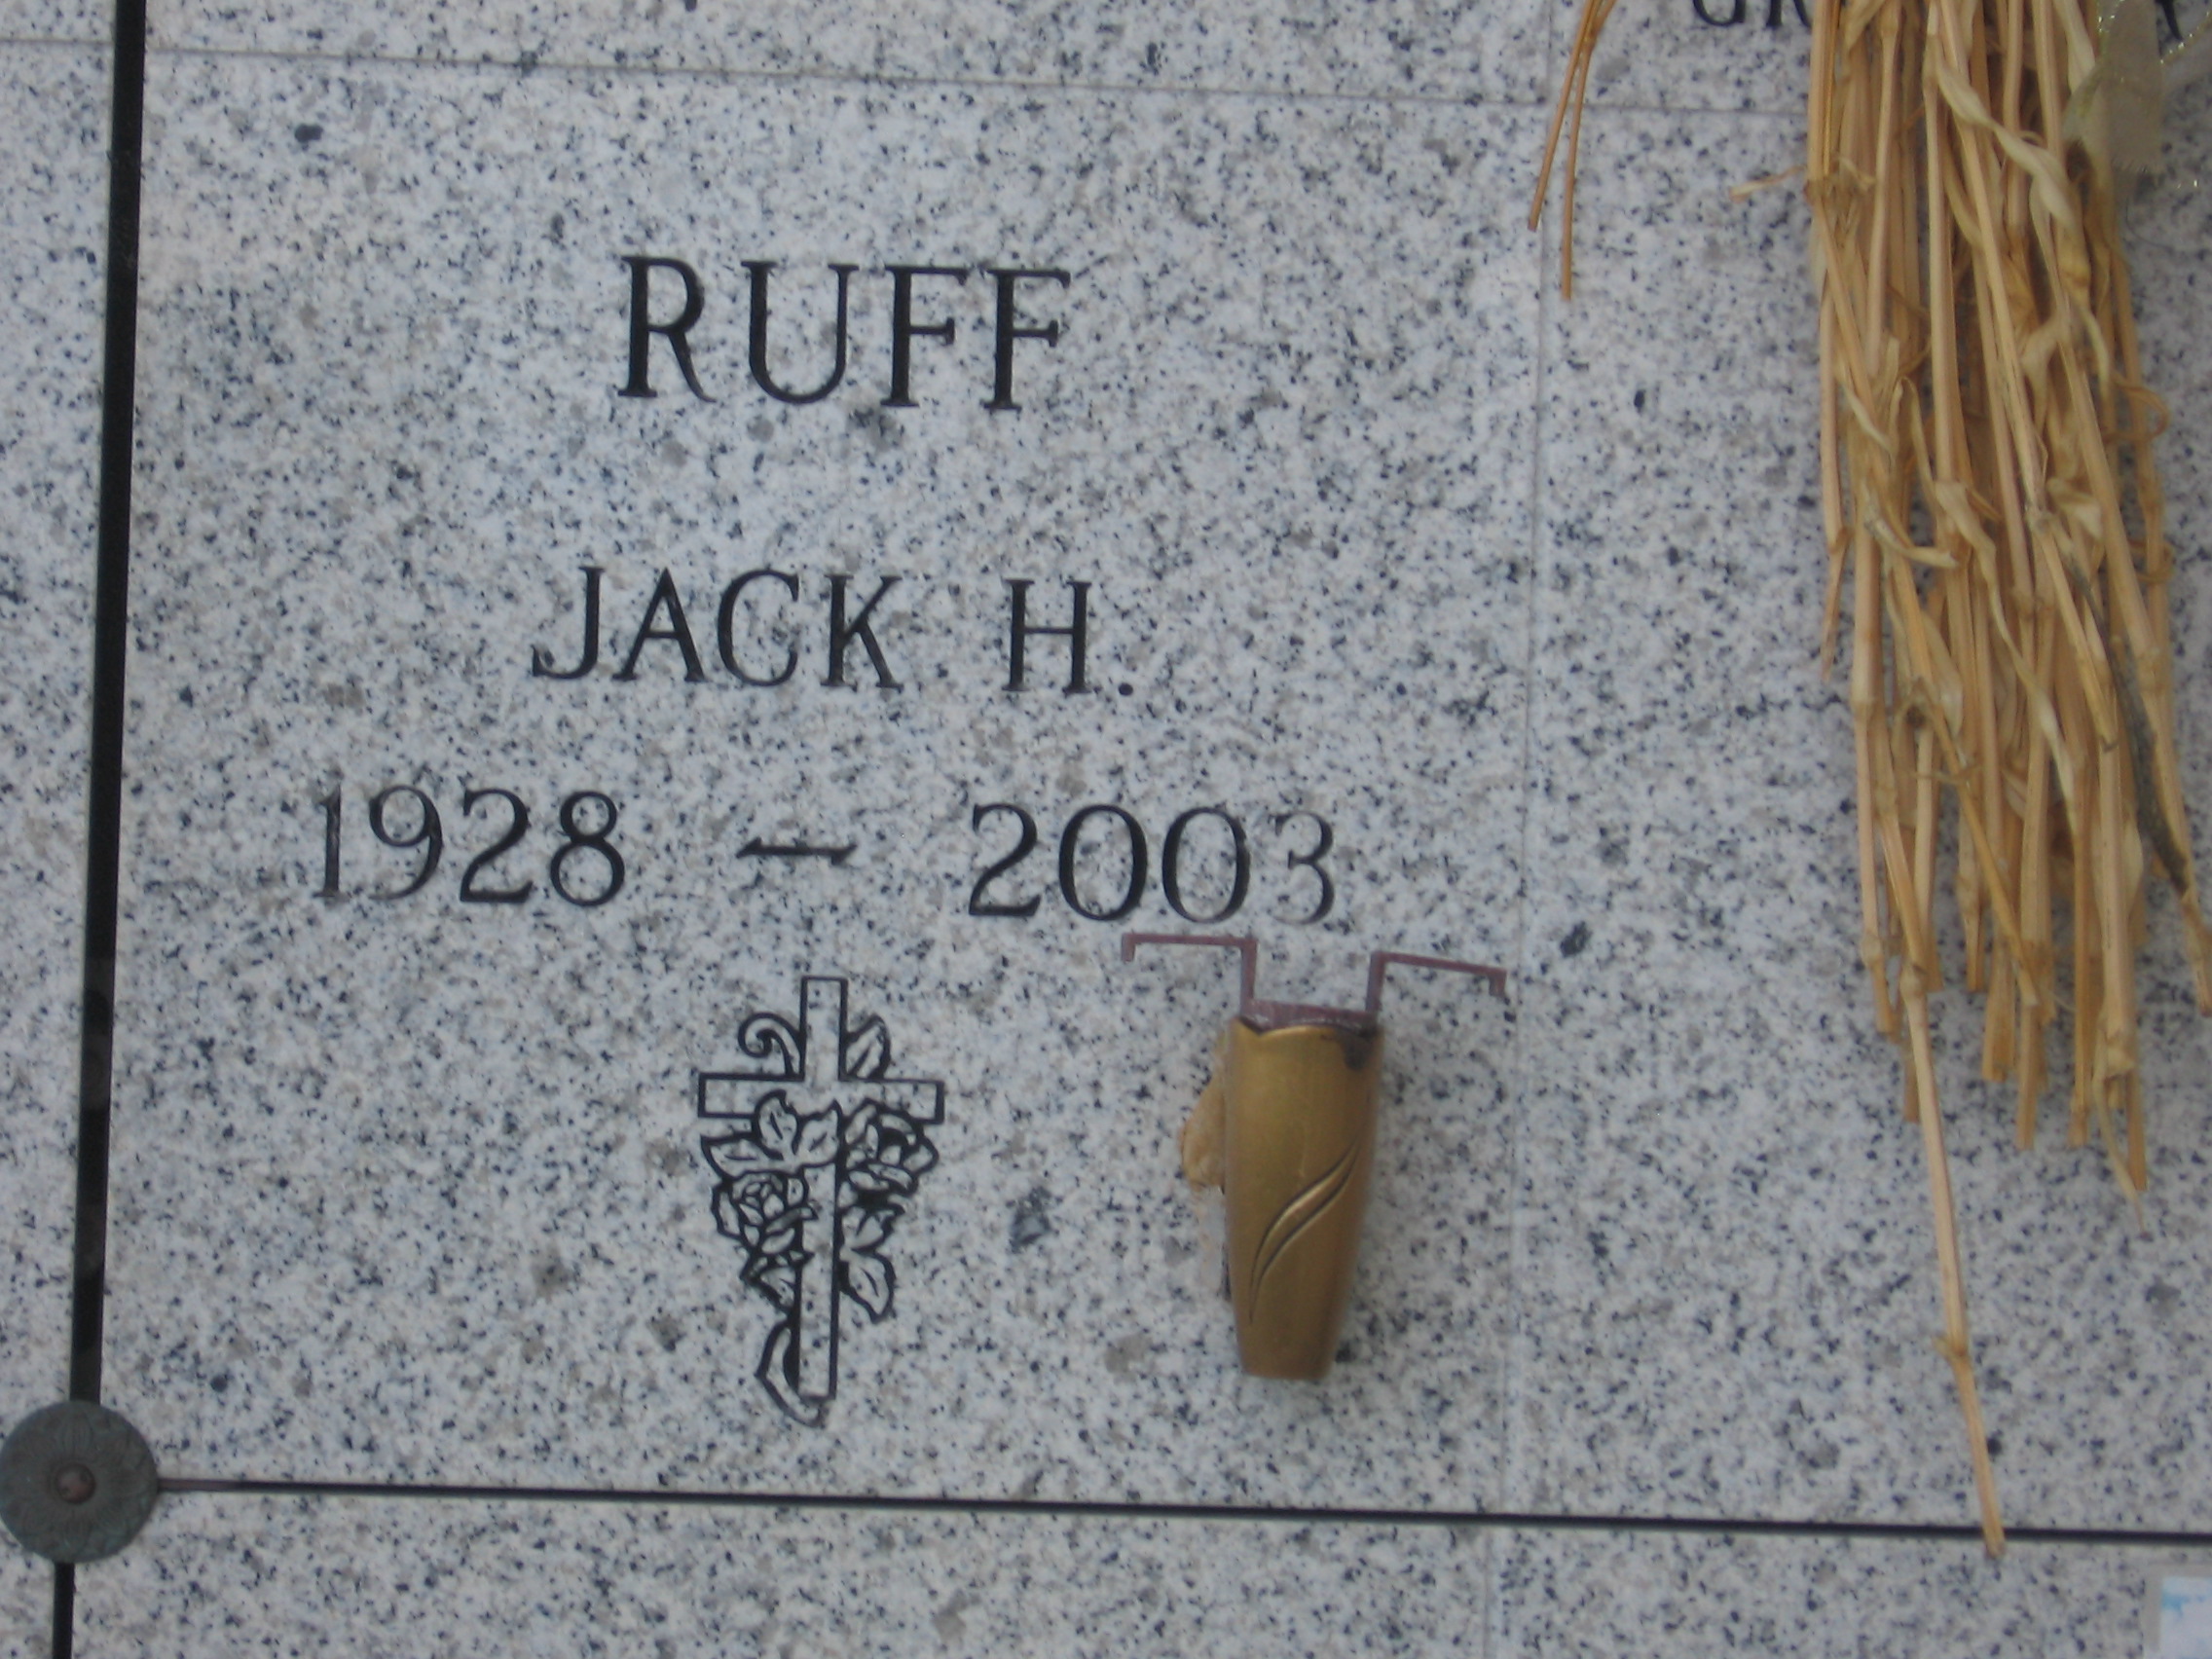 Jack H Ruff